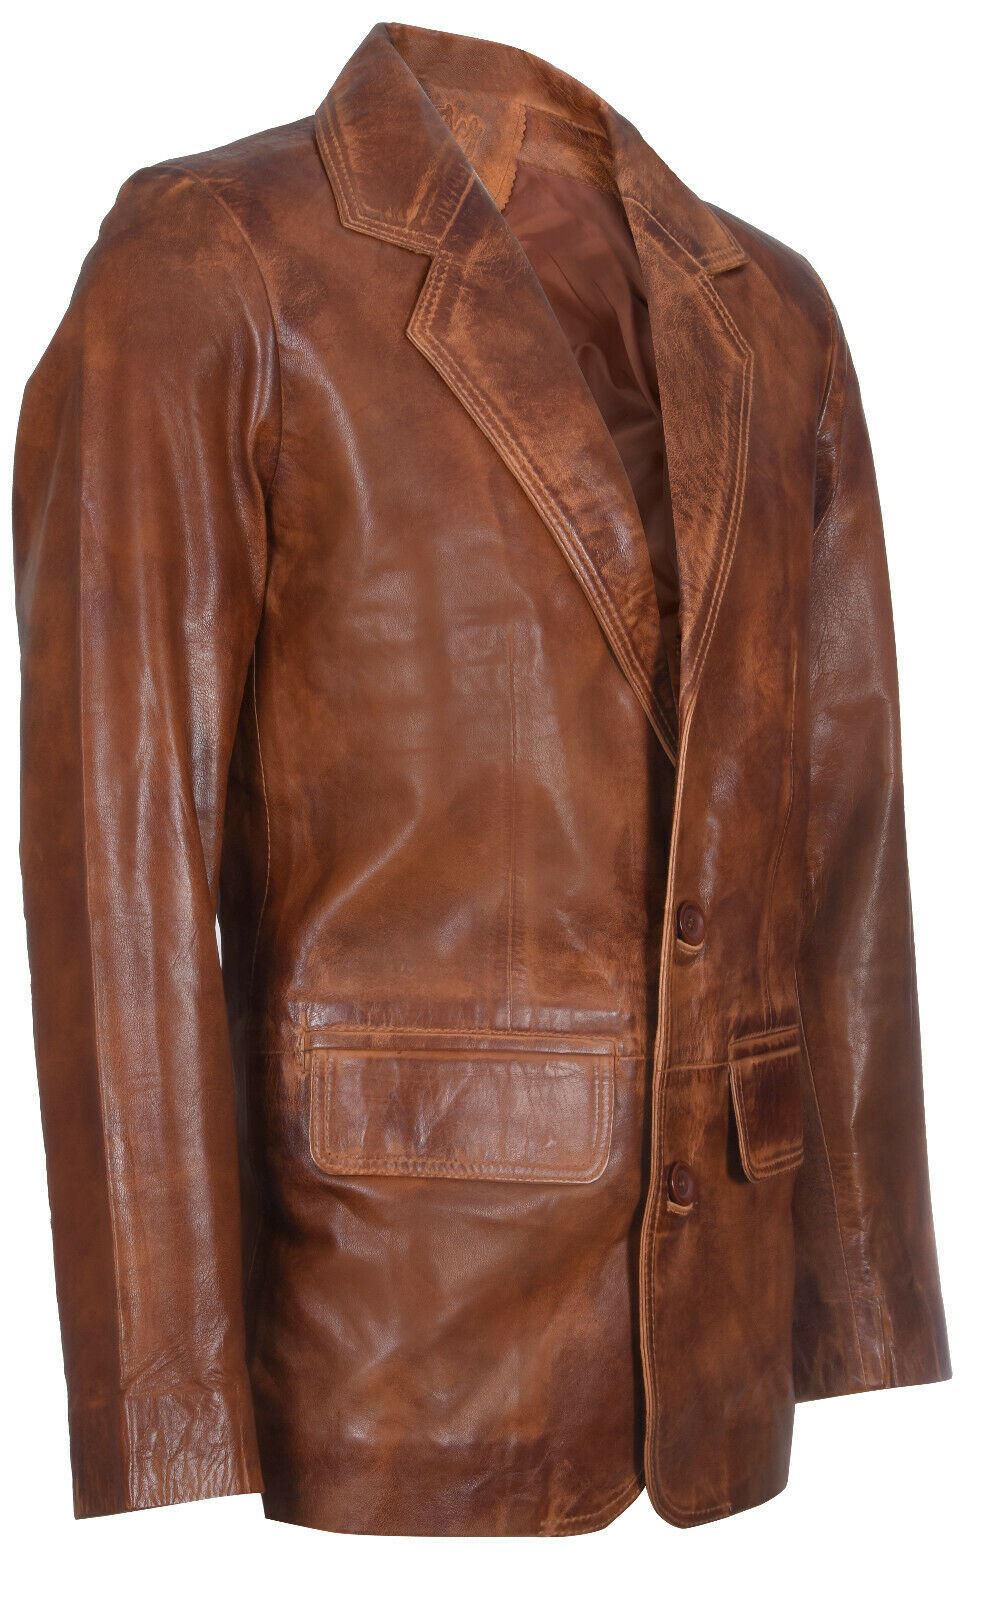 Mens Tan Leather Vintage Blazer Jacket-Dursley - Upperclass Fashions 